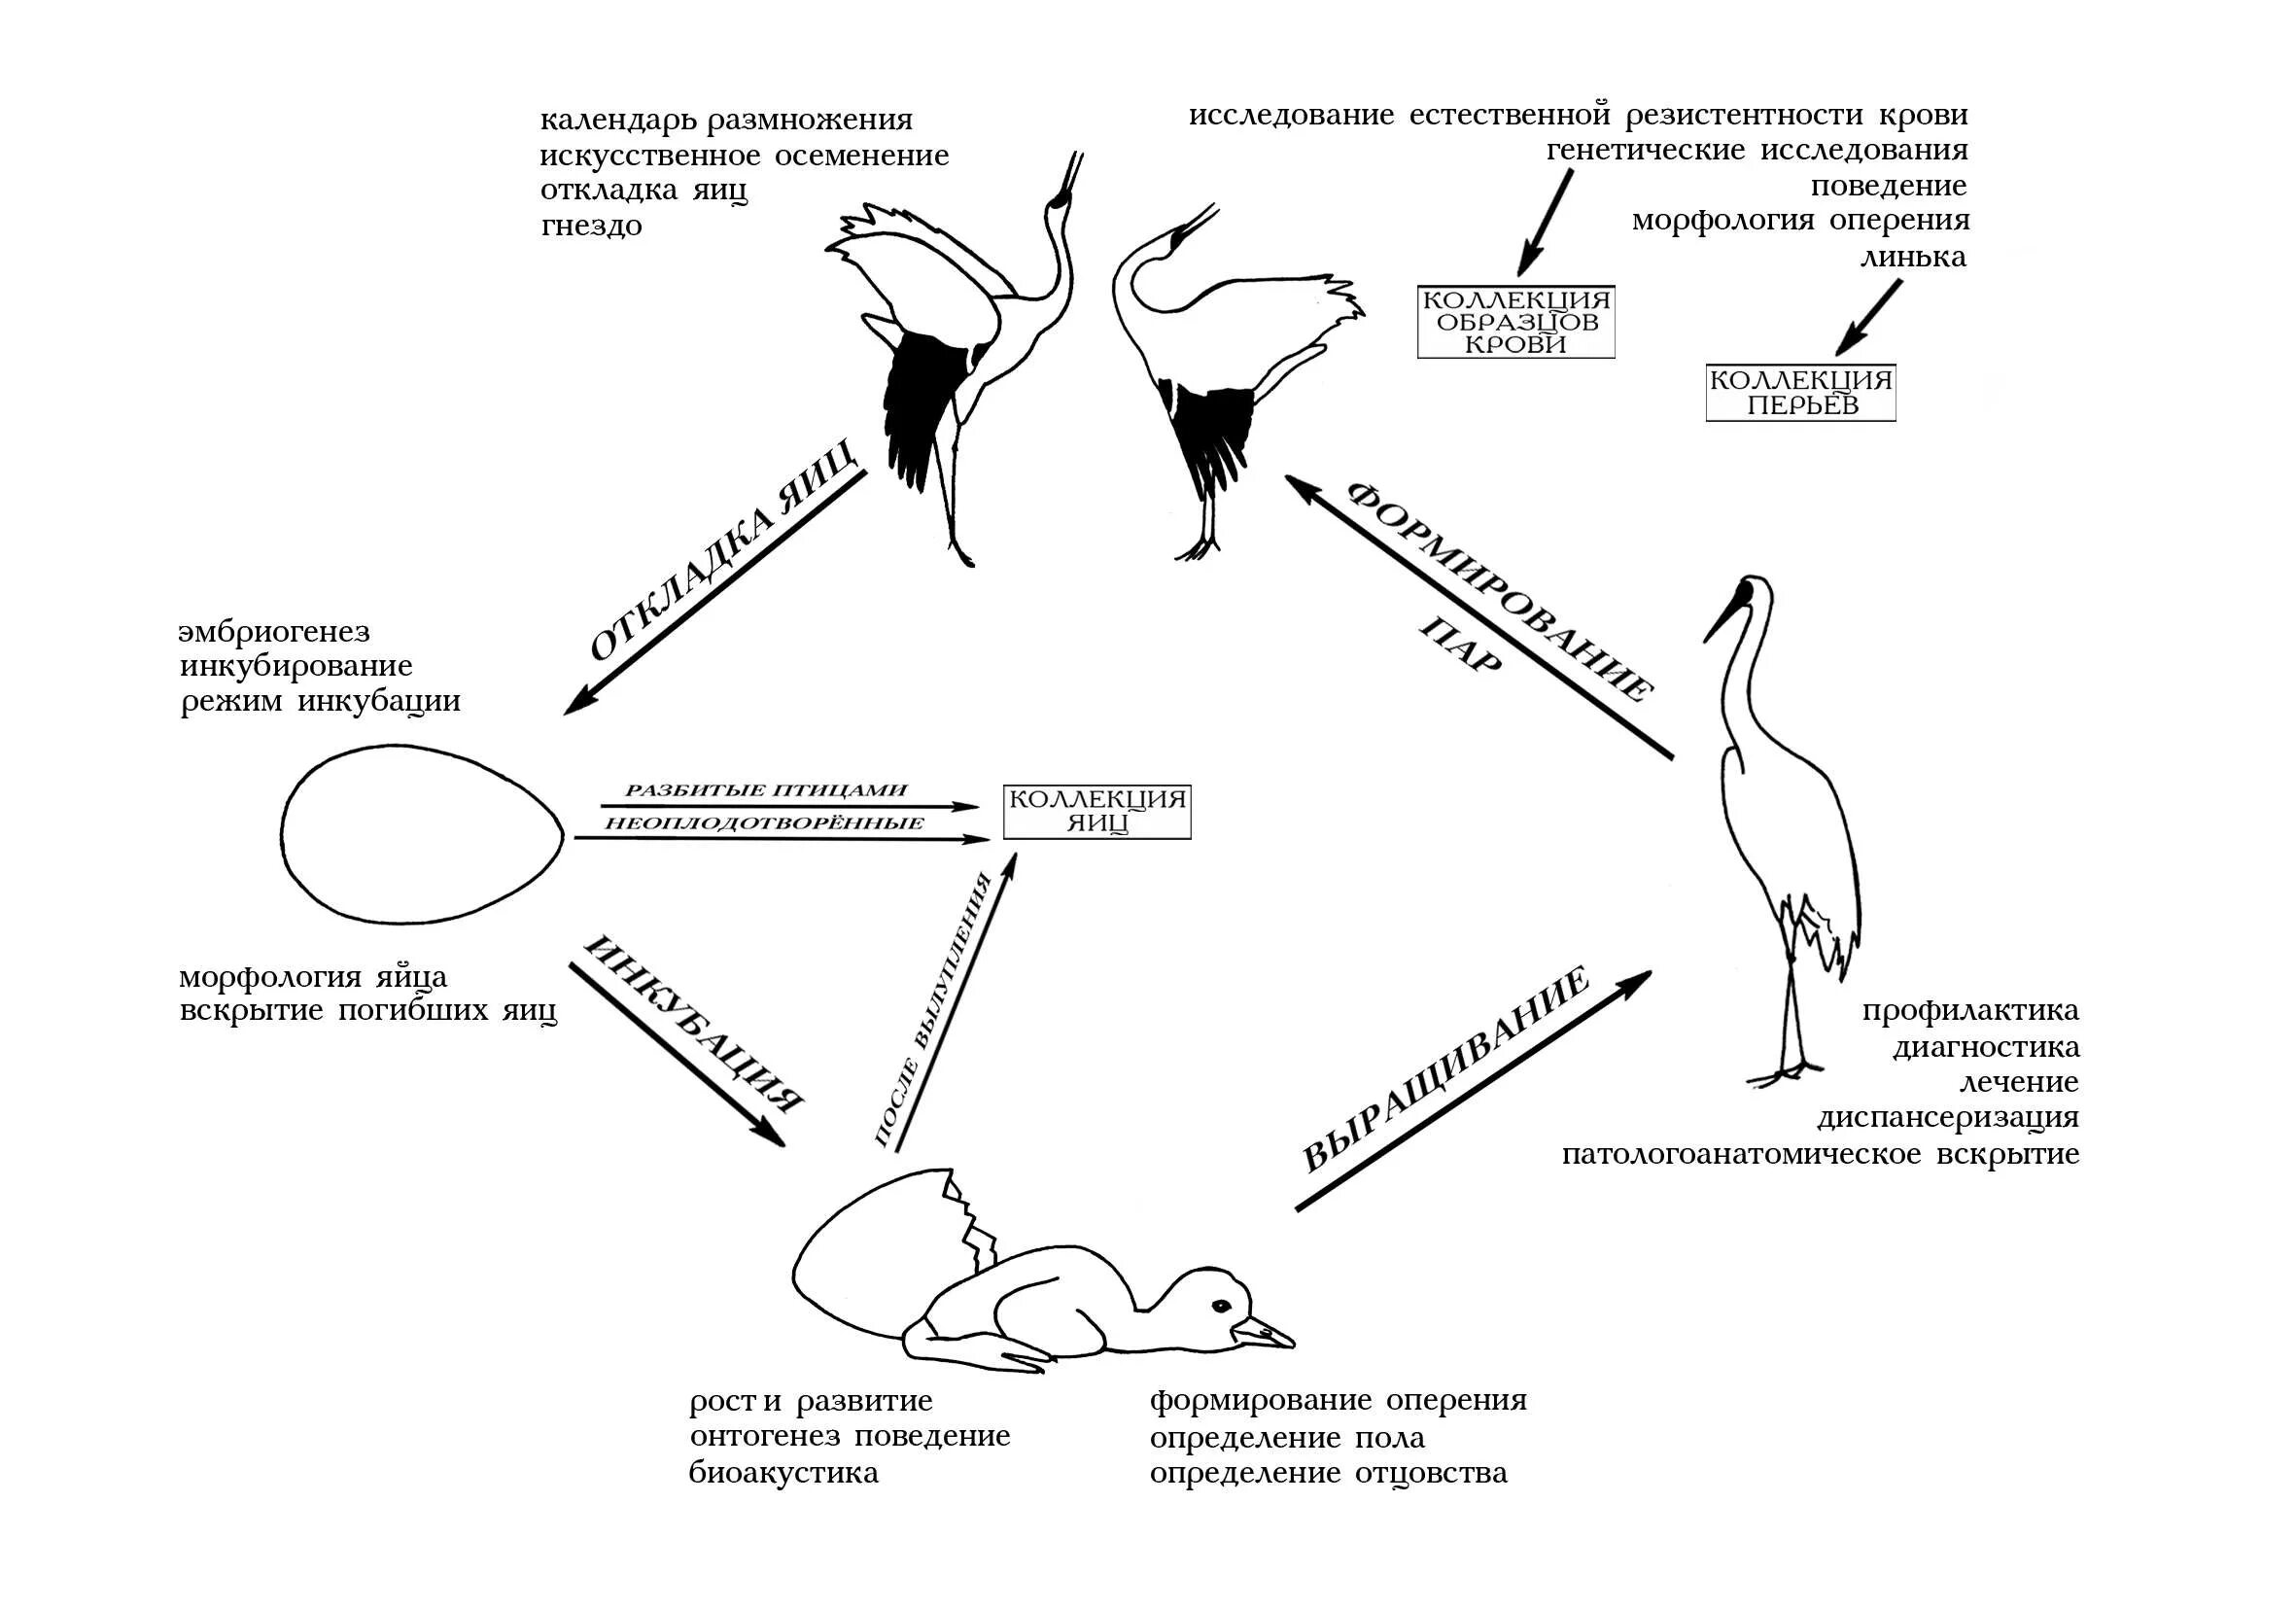 Жизненный цикл птиц схема. Цикл развития птиц схема. Цикл размножения птиц. Размножение и развитие птиц схема.